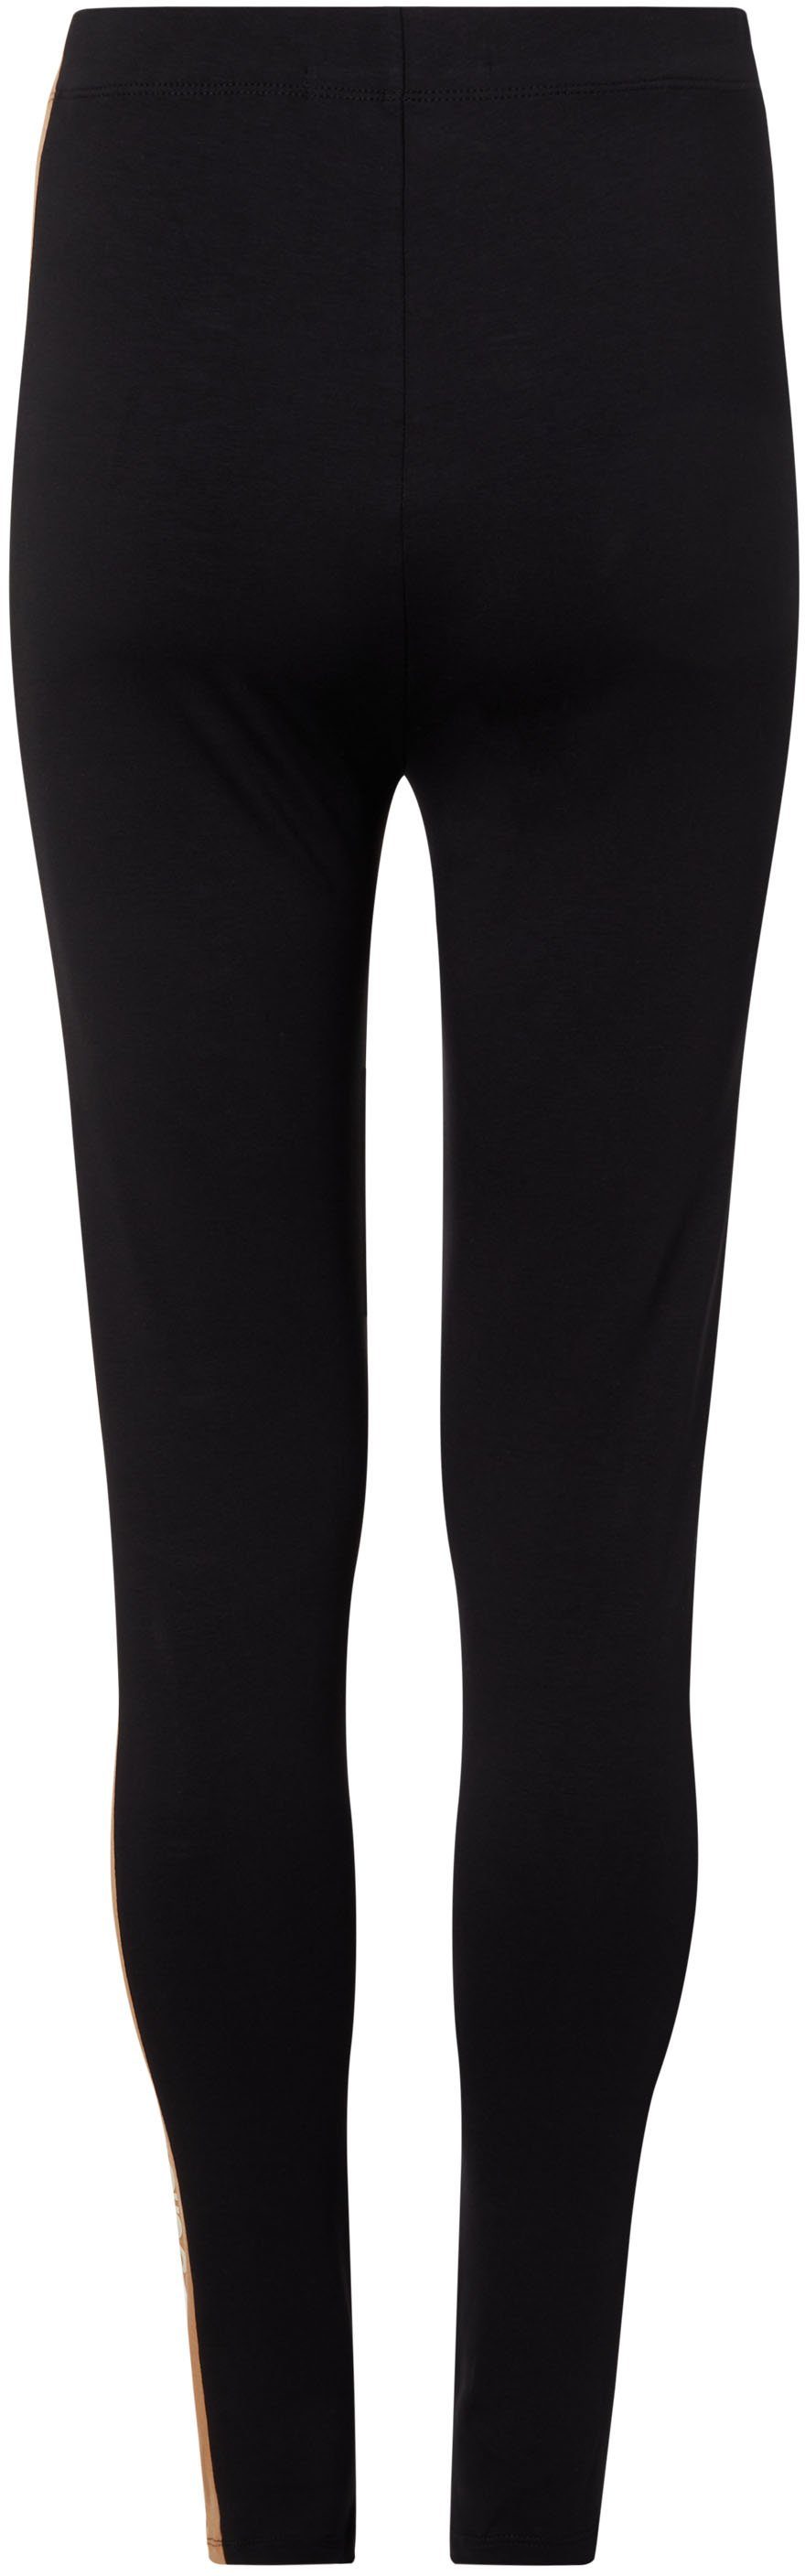 Ck Timeless Klein Calvin Leggings mit in Jeans BLOCKING Kontrastfarbe Black/ Camel COLOR CK-Schriftzug LEGGINGS